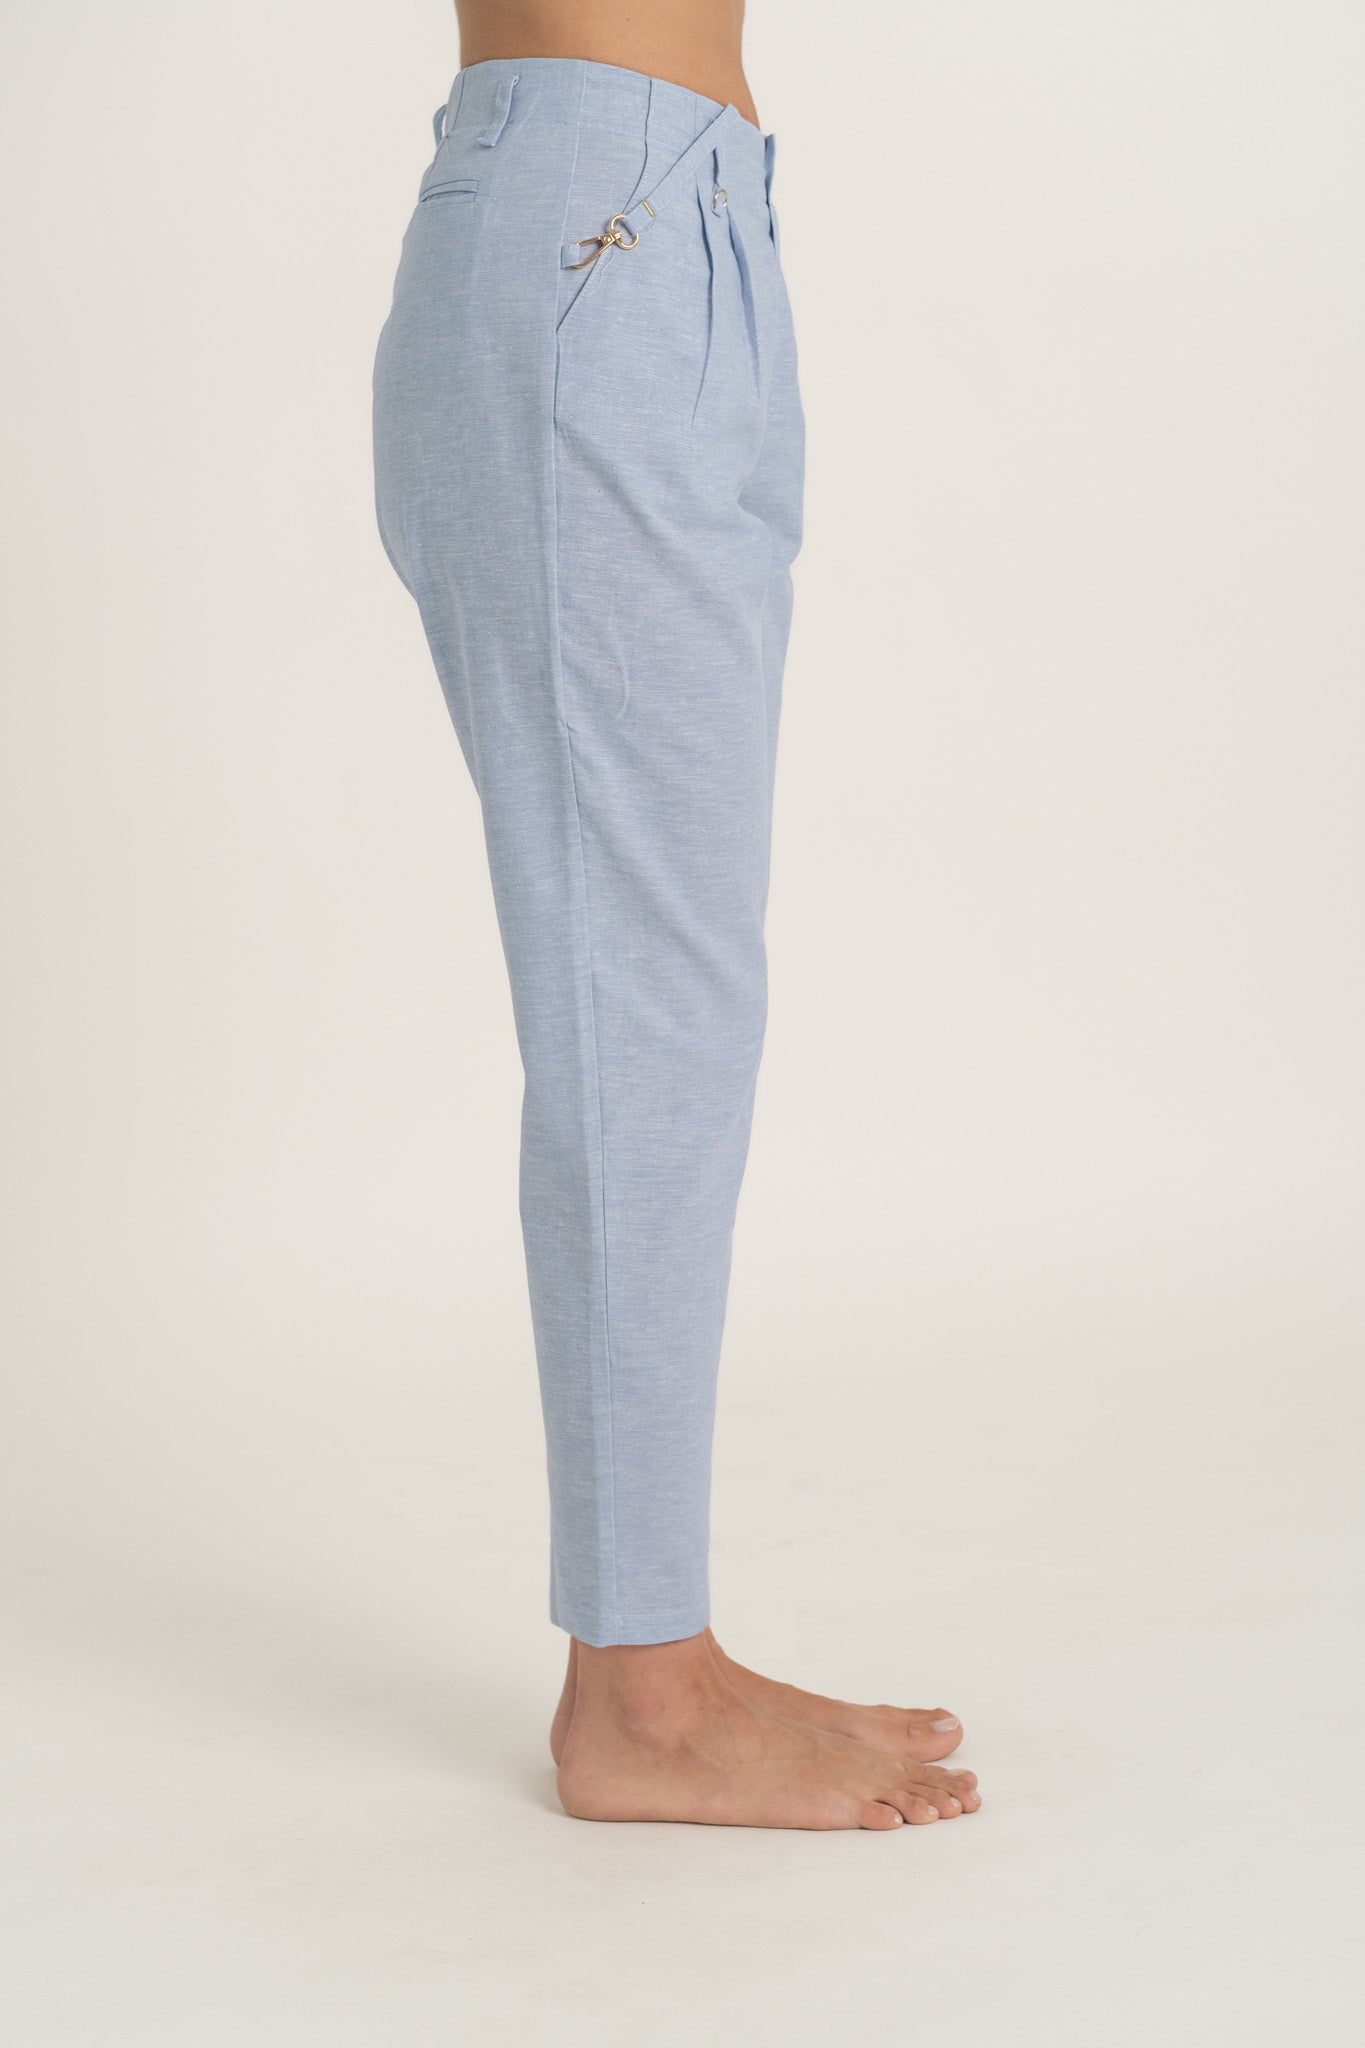 Eldon Linen Pants - Morrocan Blue Tonic | Boden US | Linen trousers, Grey  linen pants outfit, Linen pants